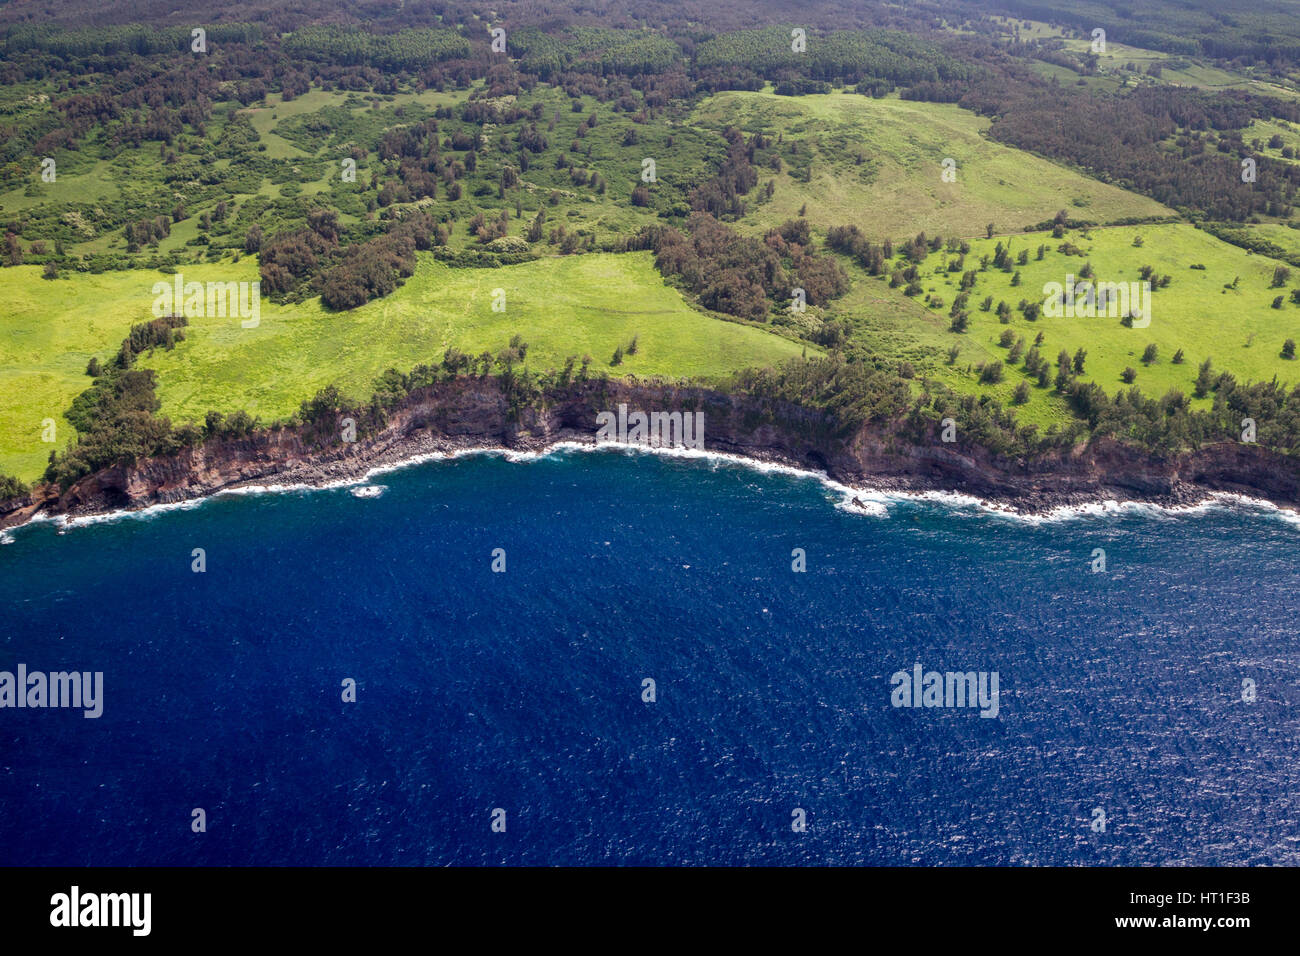 Aerial view over the East Coast of Big Island, Hawaii, USA. Stock Photo